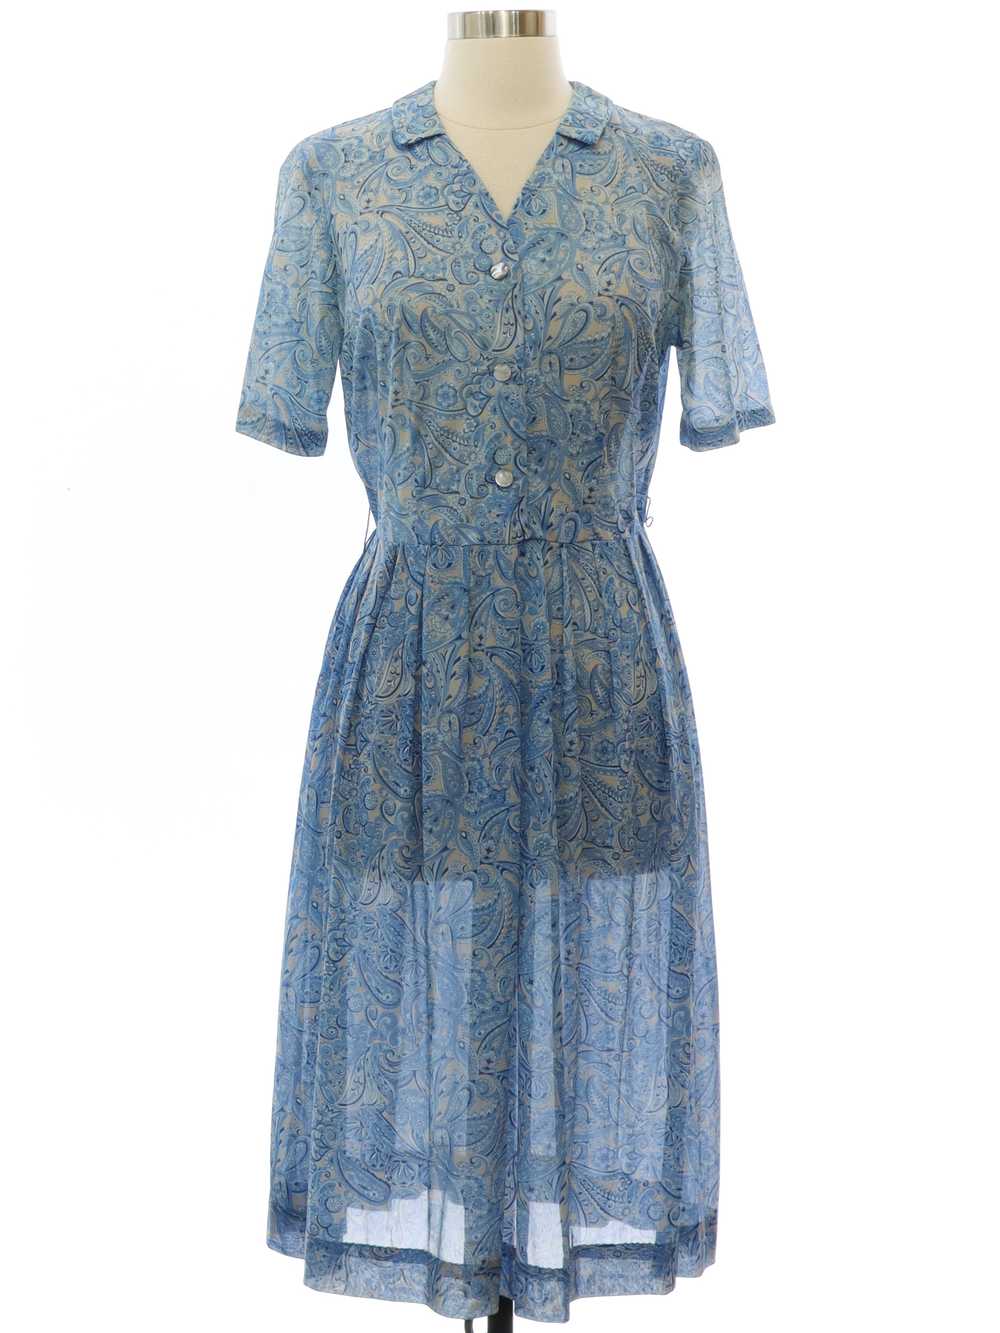 1950's Pennypacker Pennypacker Day Dress - image 1